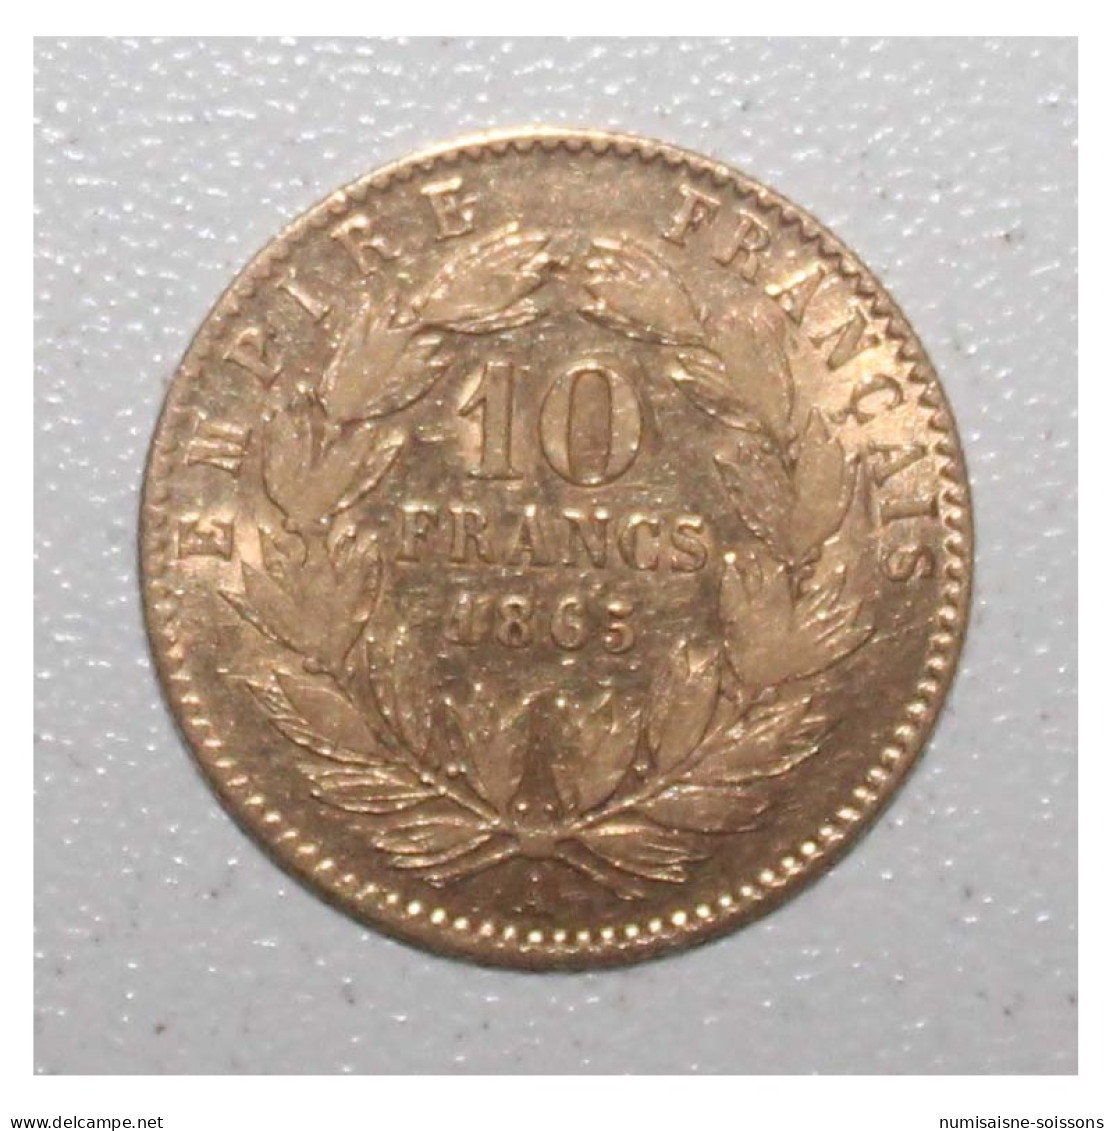 GADOURY 1015 - 10 FRANCS 1866 A - Paris - OR - TYPE NAPOLÉON III - KM 800 - TTB - 10 Francs (or)